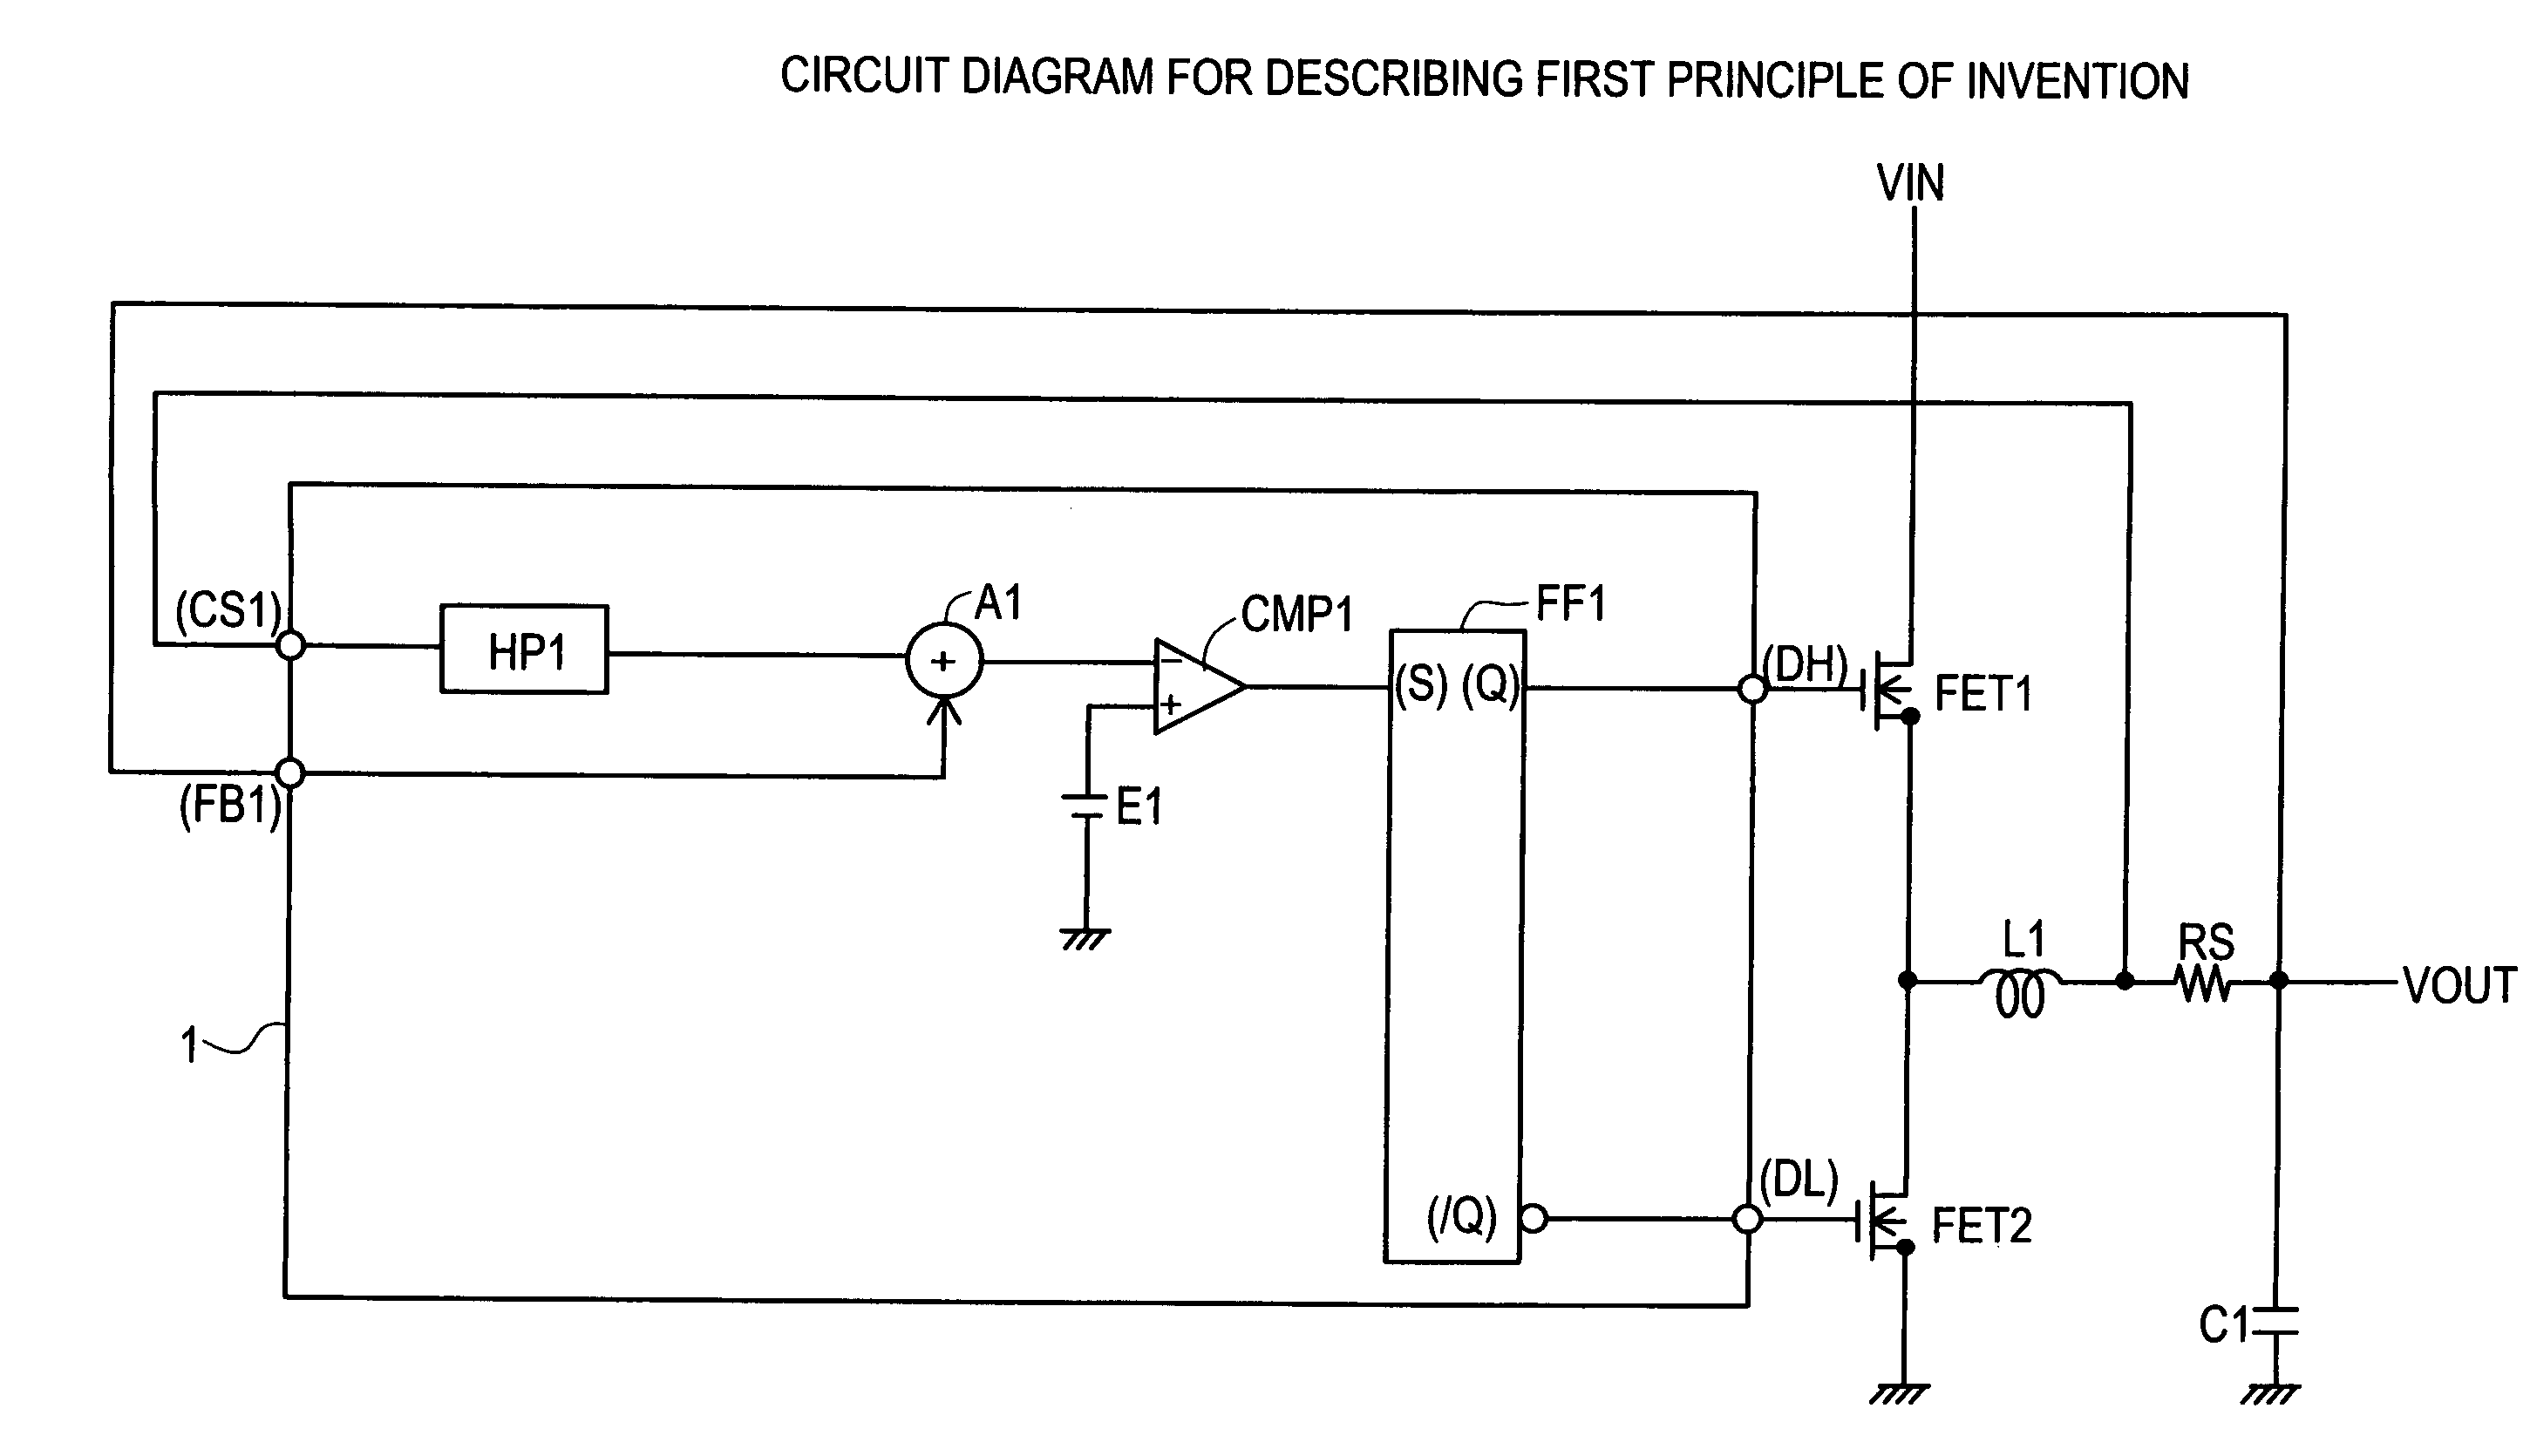 DC-DC converter control circuit and DC-DC converter control method